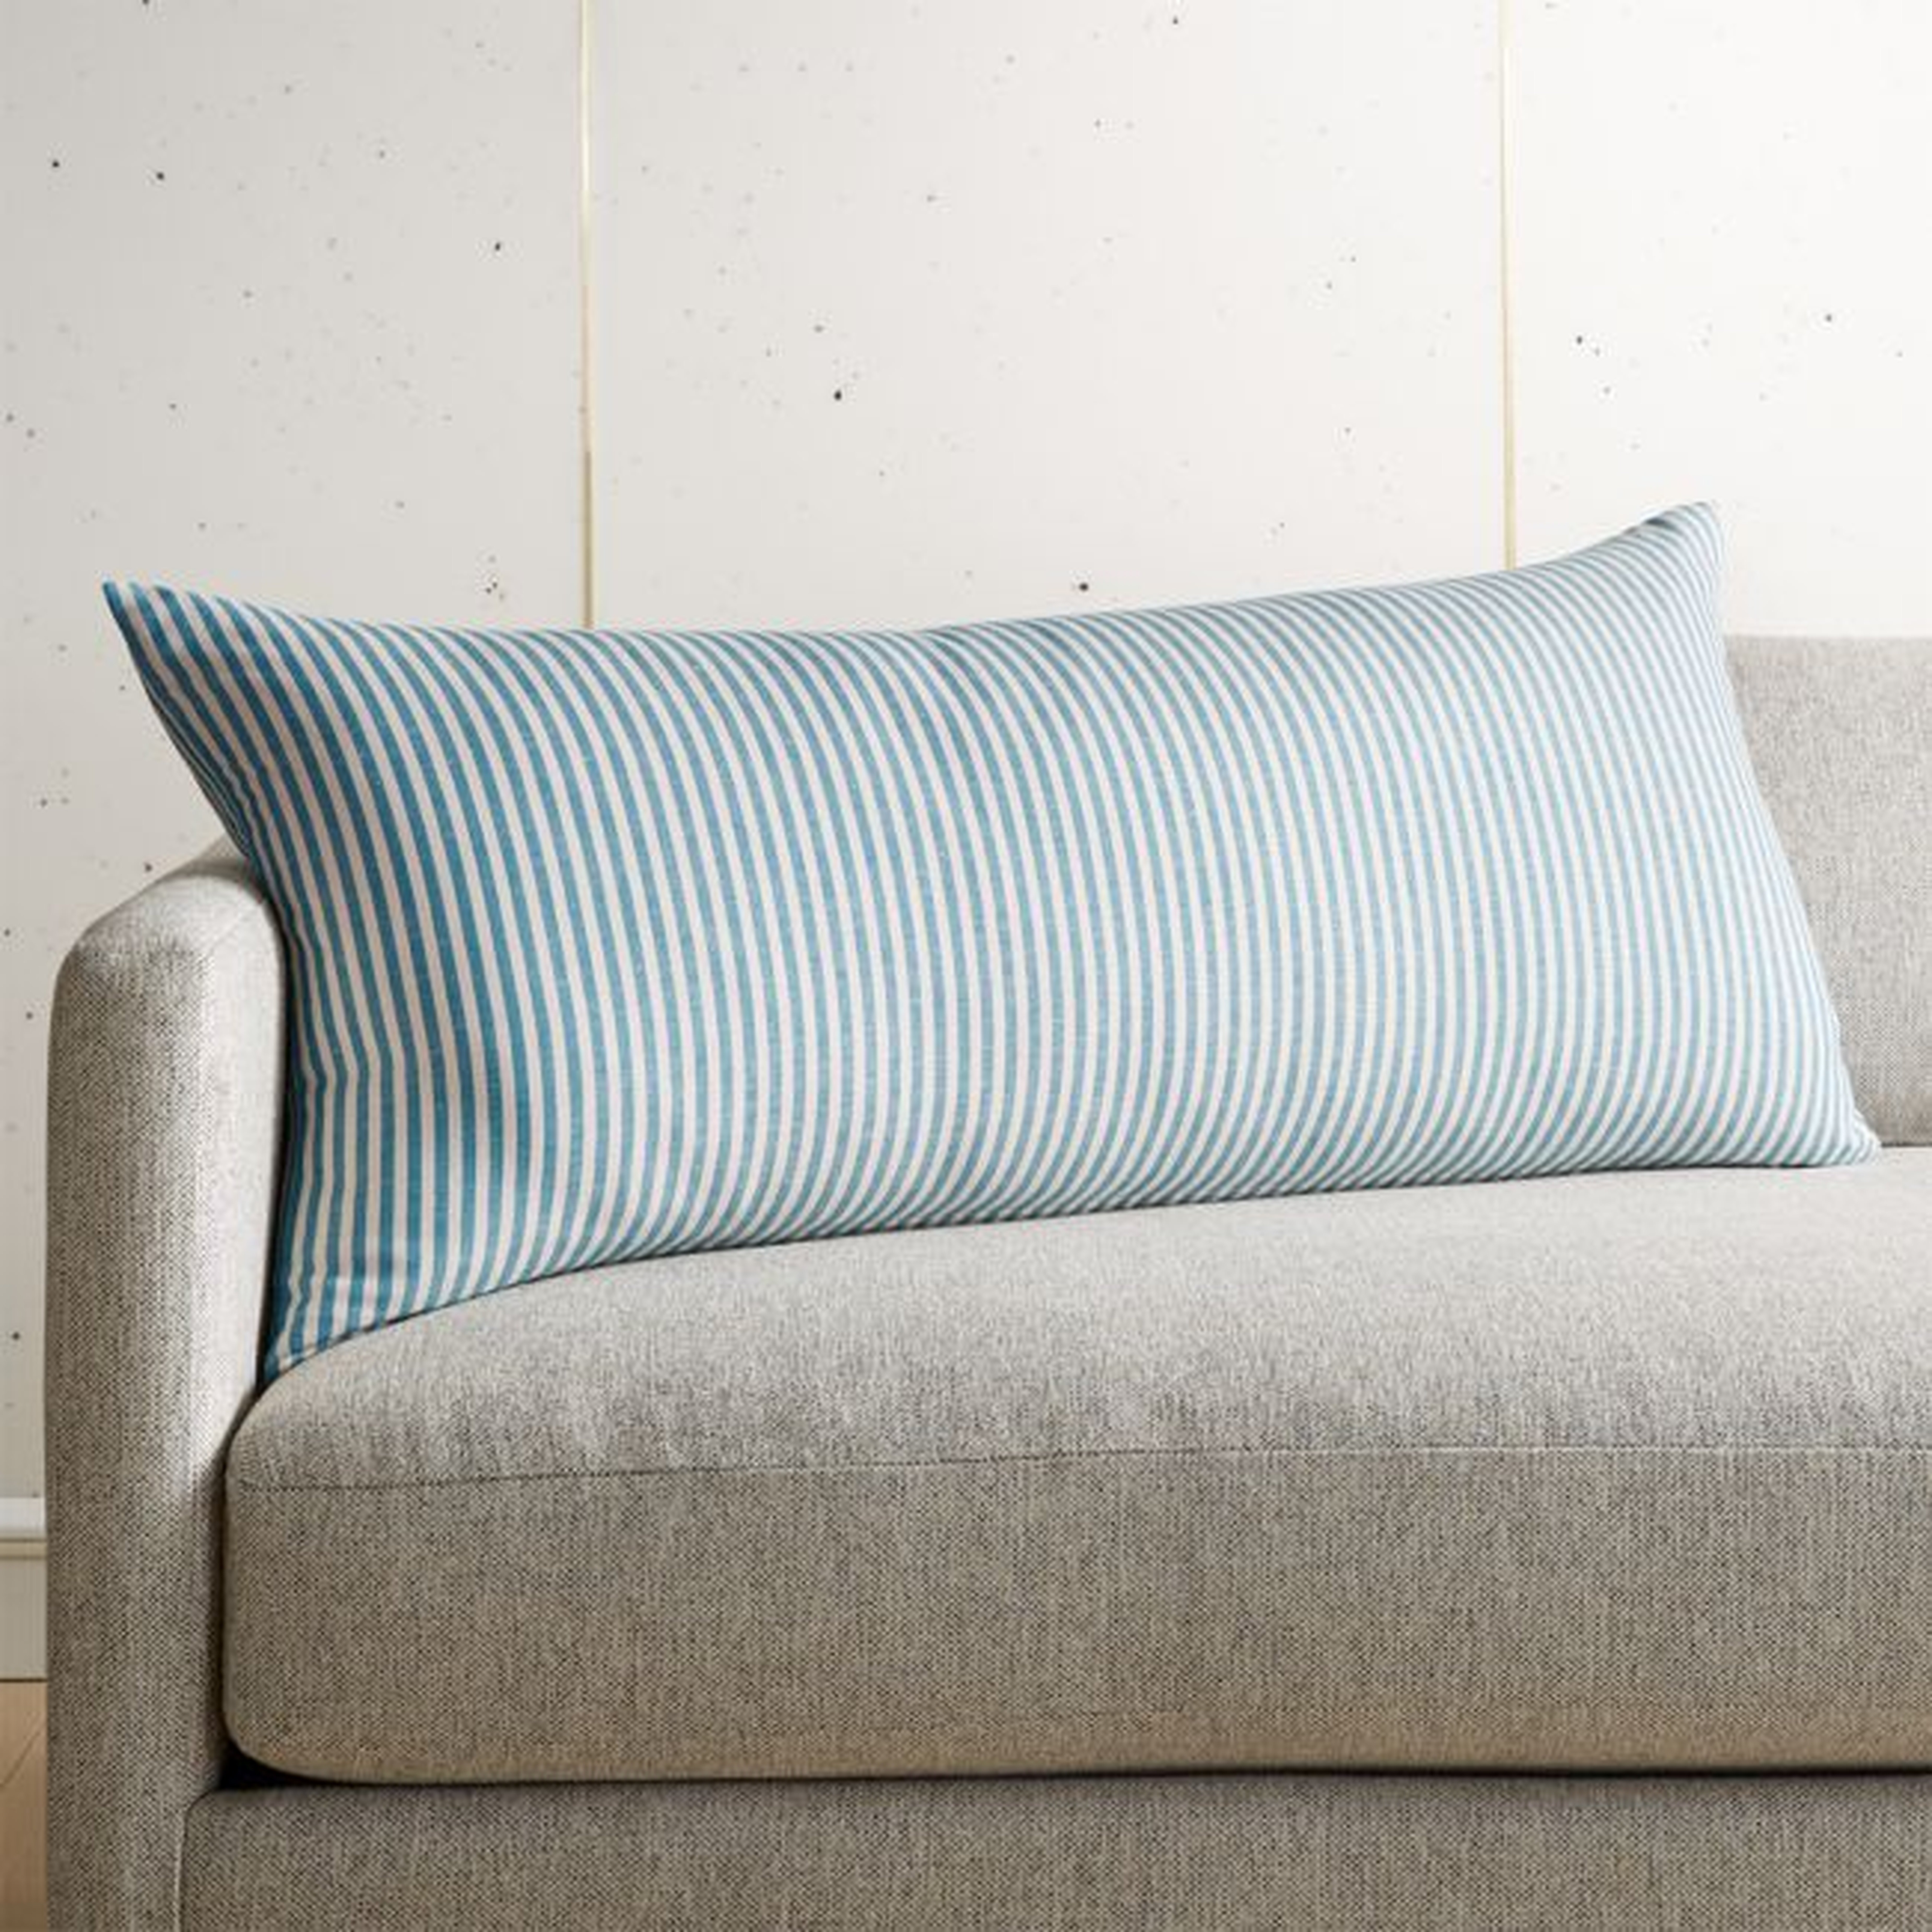 36"x16" Costa Nova Linen Stripe Pillow with Feather-Down Insert - CB2